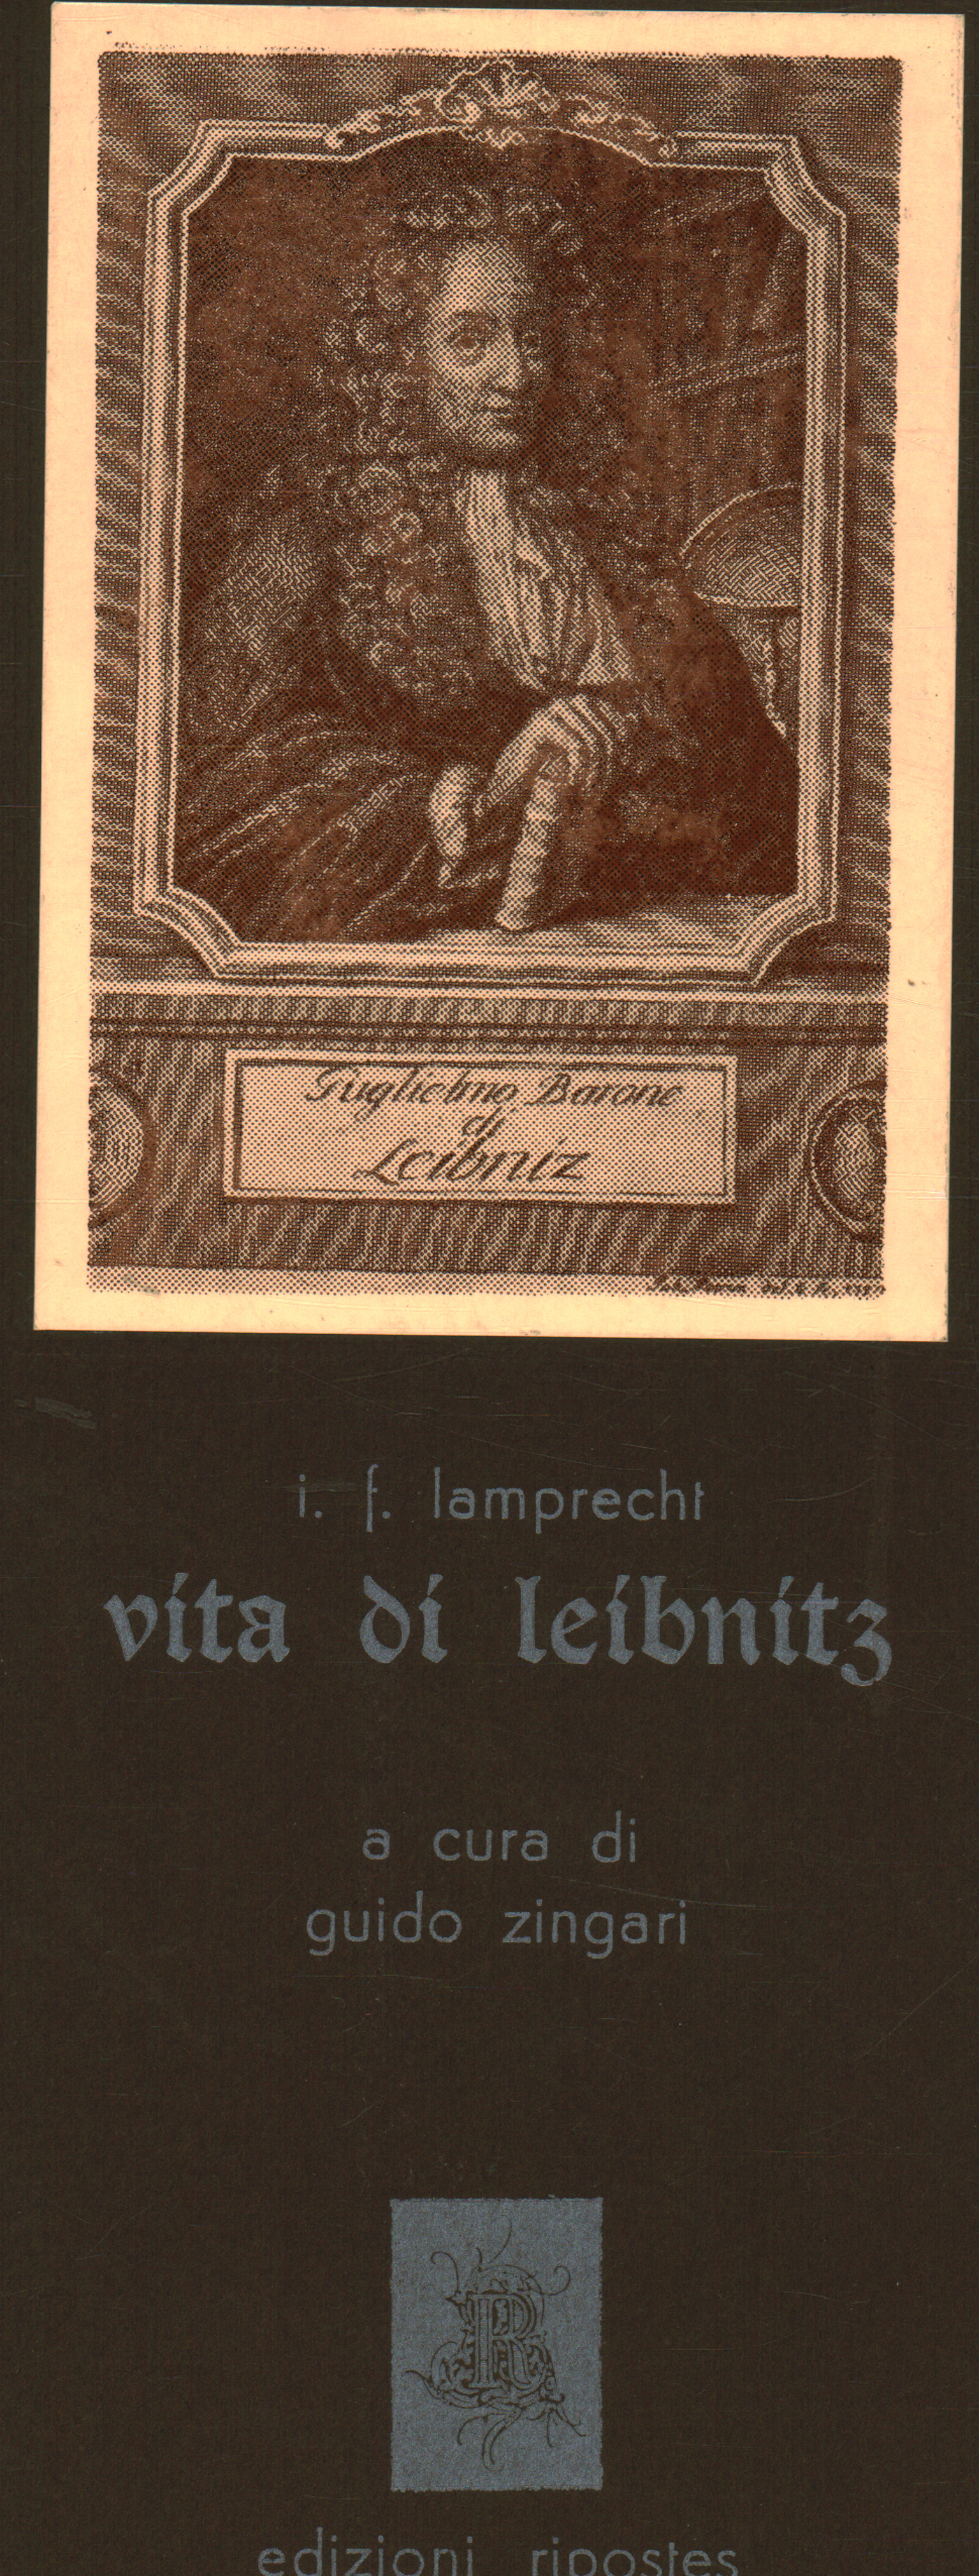 Life of Leibnitz, I. F. Lamprecht